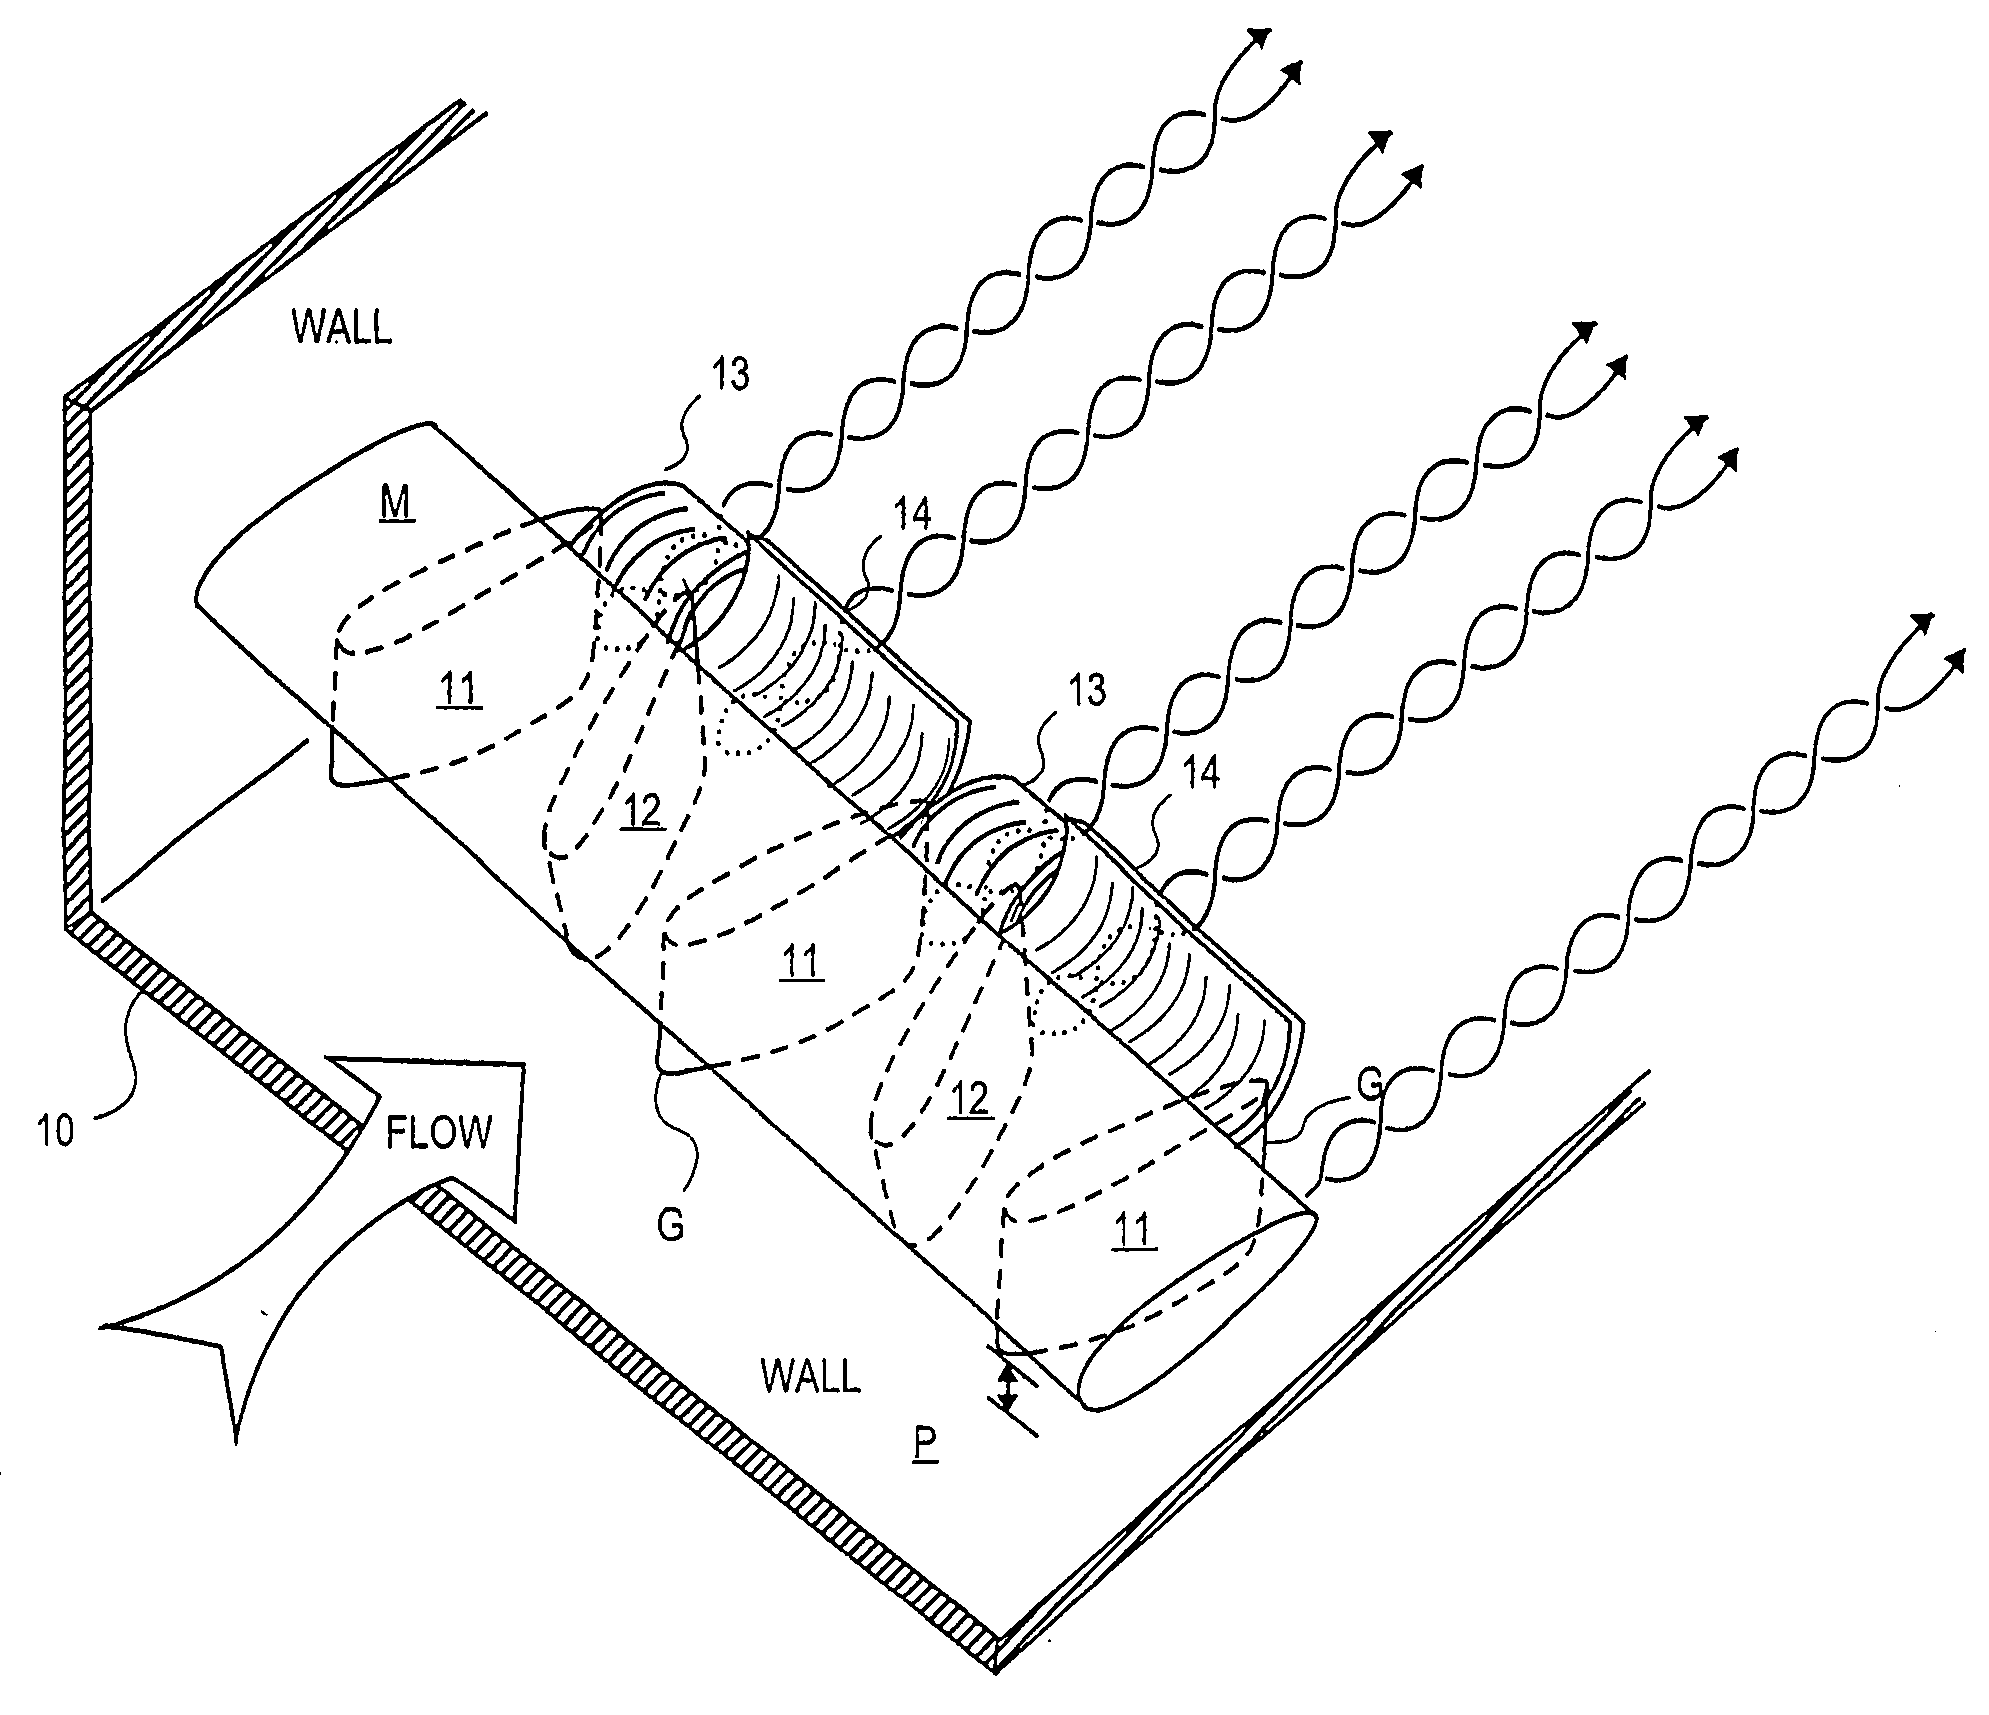 Externally Mounted Vortex Generators for Flow Duct Passage